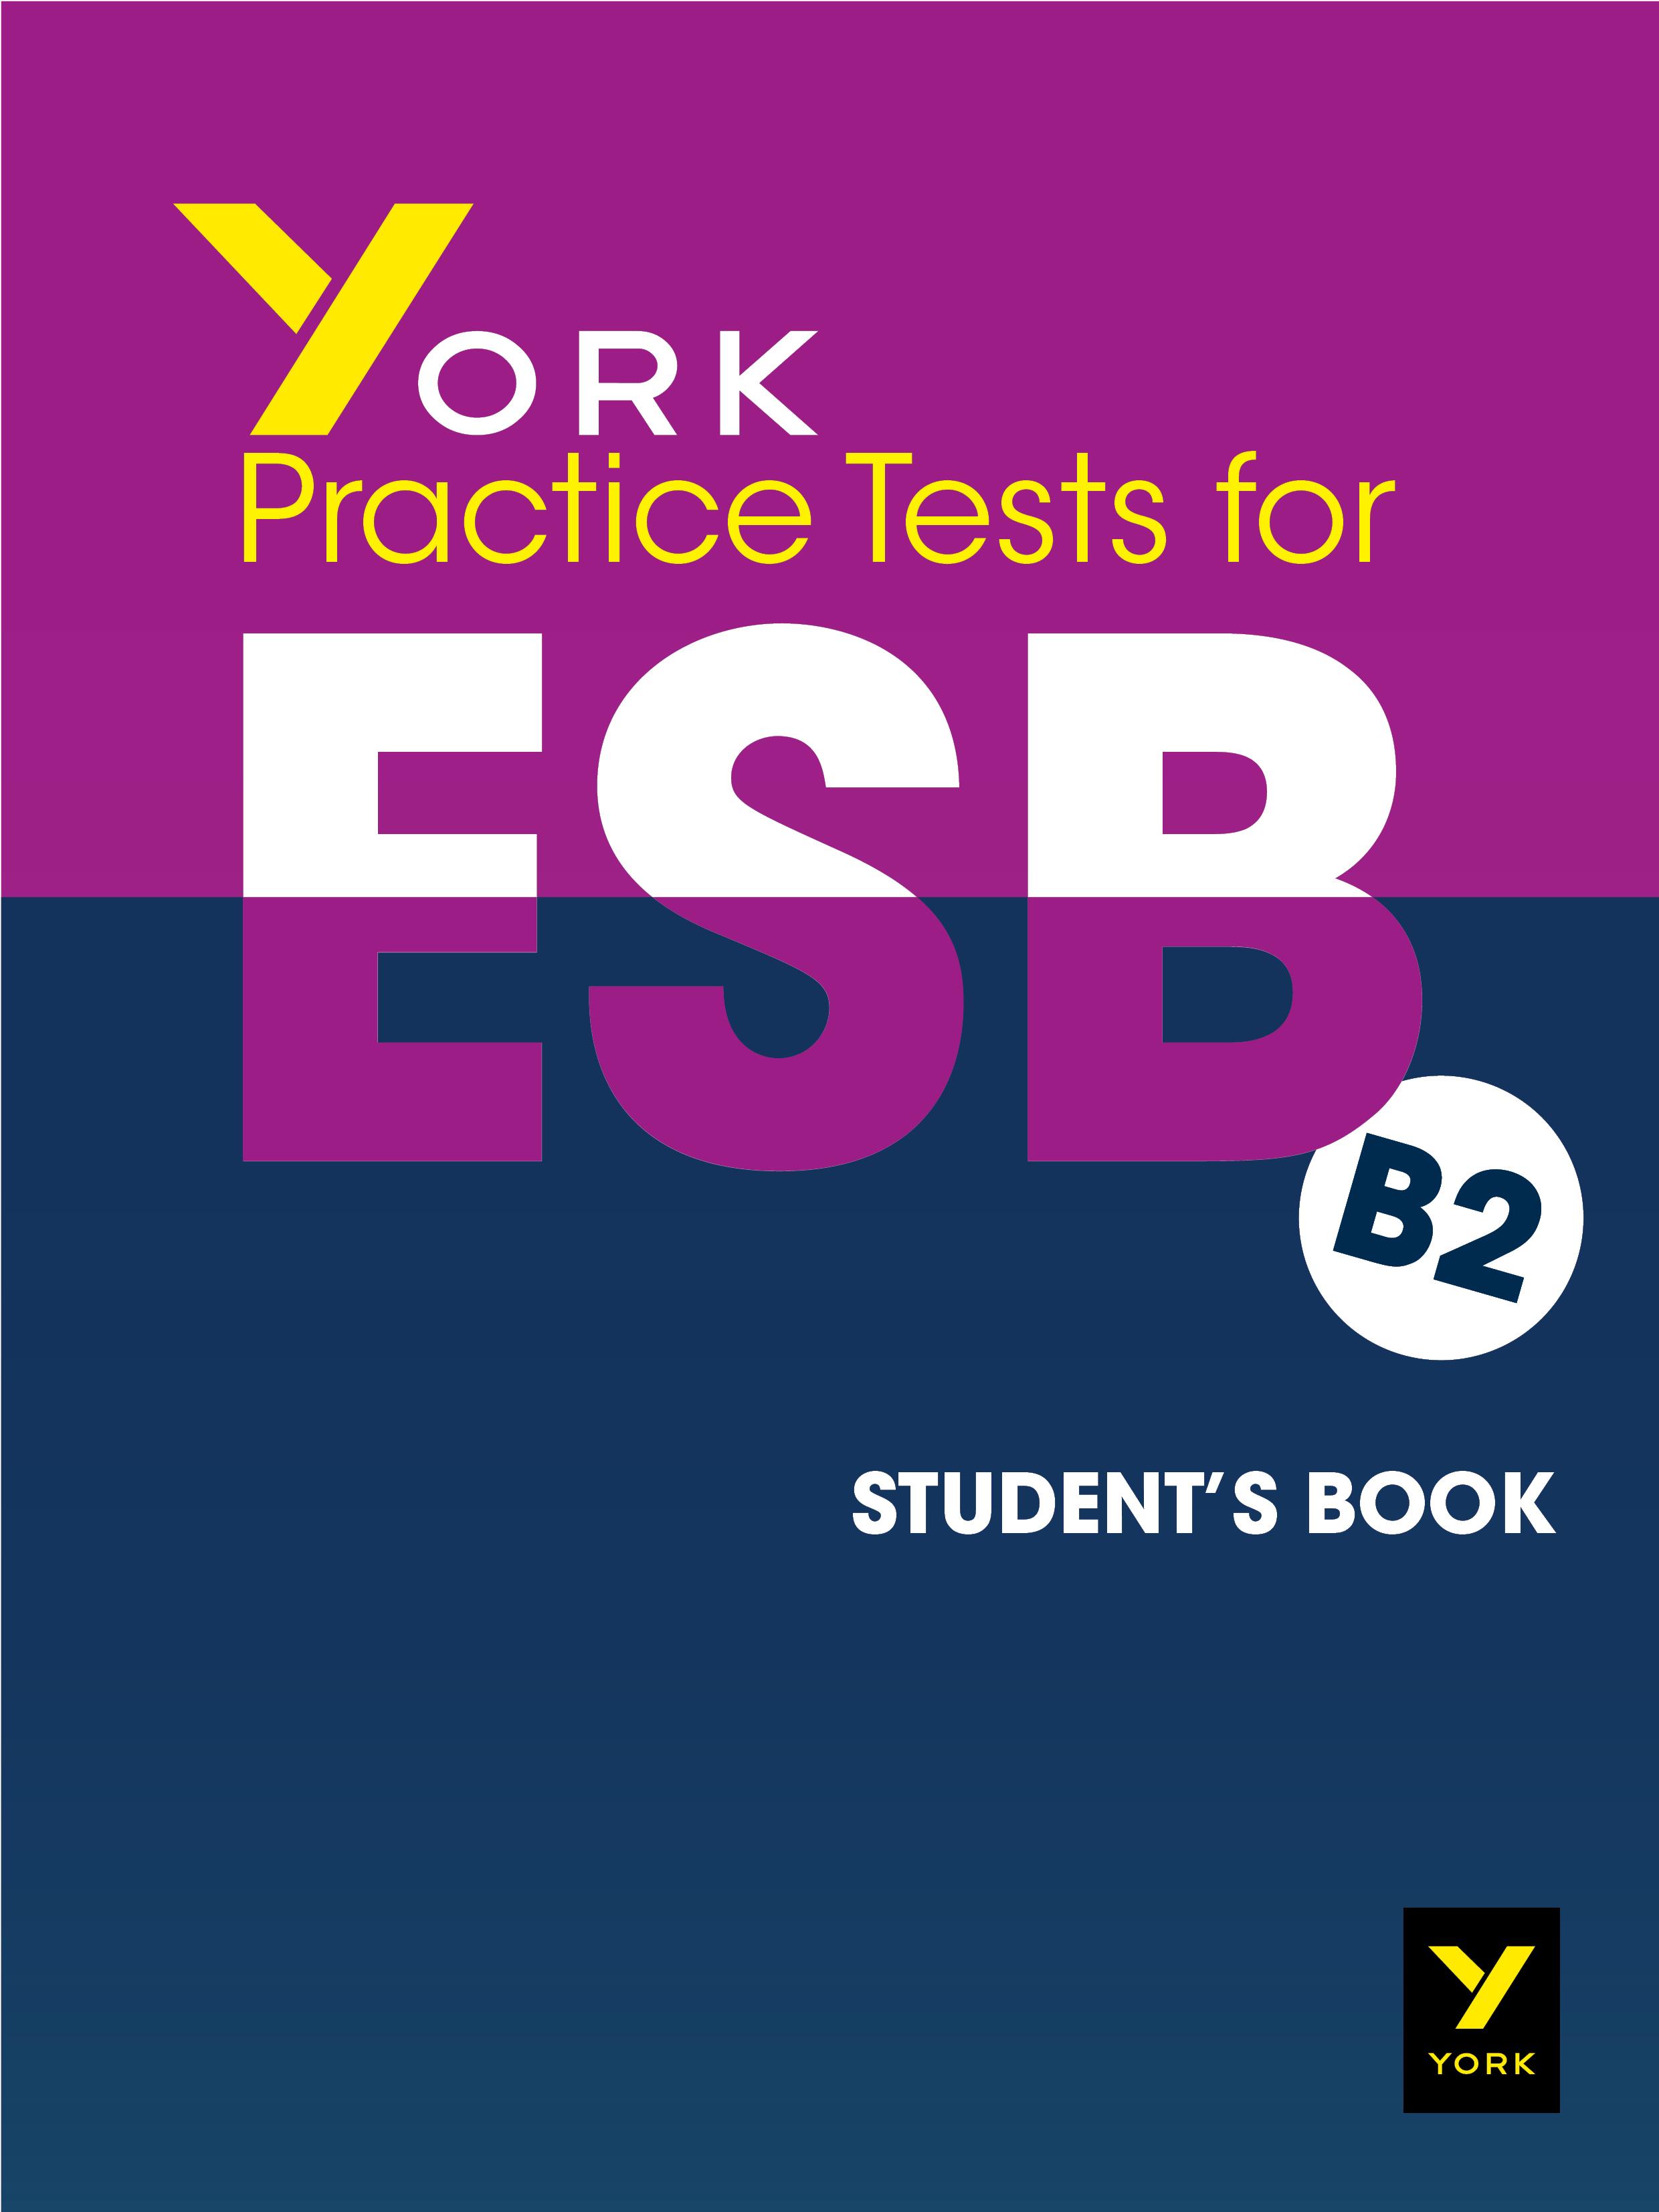 YORK PRACTICE TESTS FOR ESB B2 SB